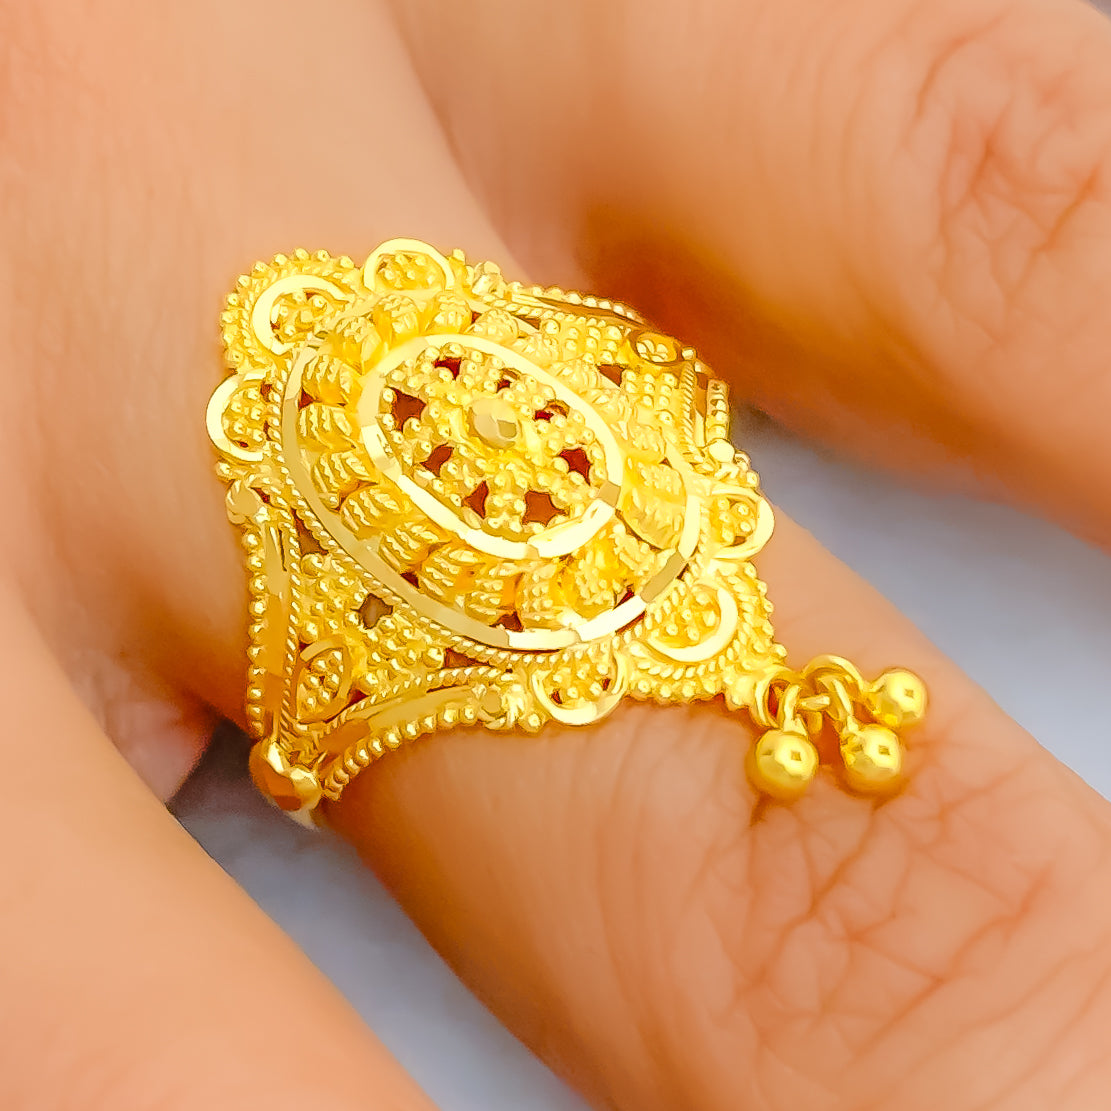 Knitted Design 22 KT Gold Ring for Men